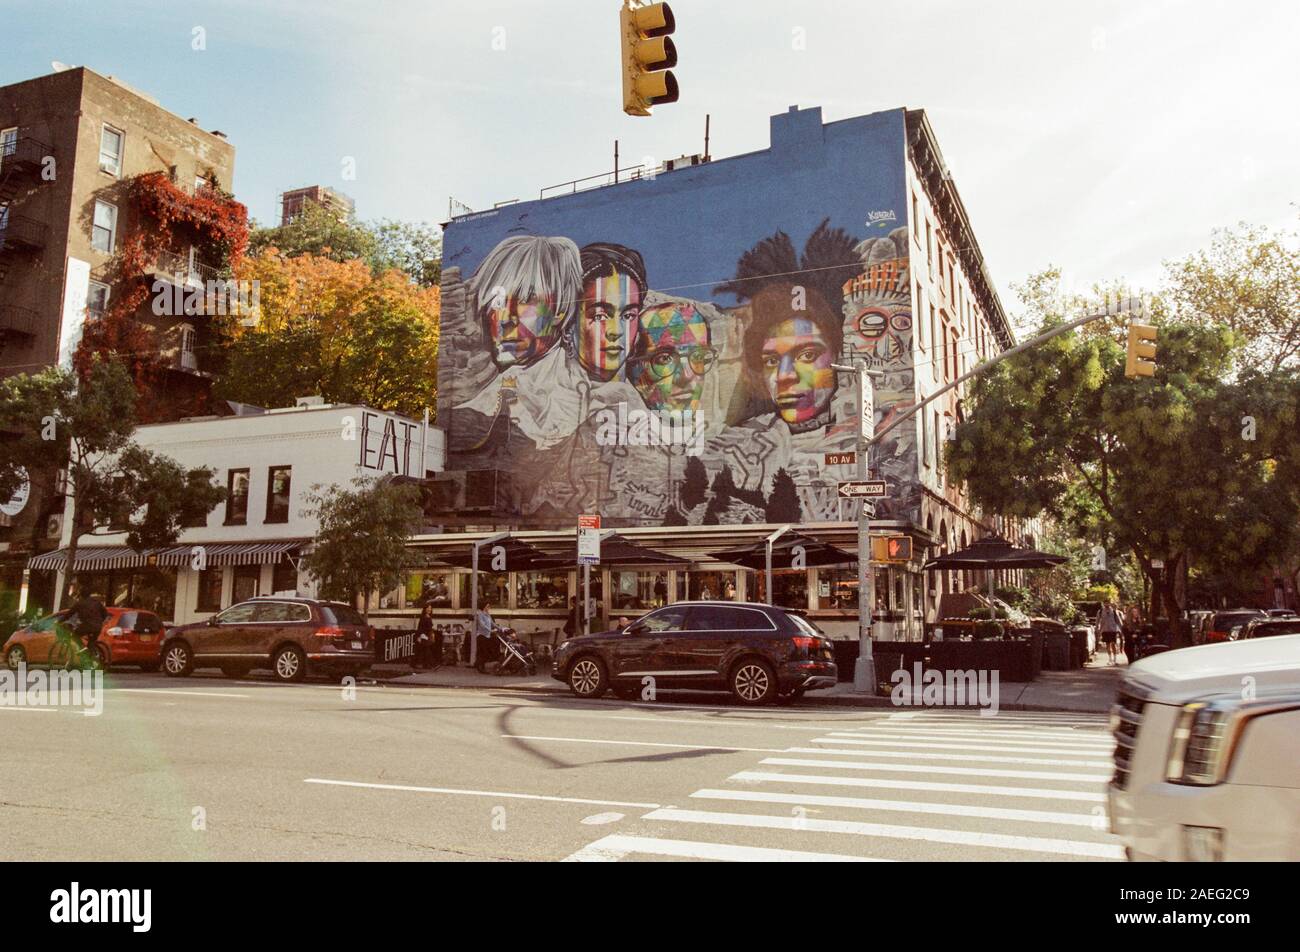 Eduardo Kobra avec peinture murale, Frida Kahlo Andy Warhol, Keith Haring et Jean Michel Bastiquiat. L'Empire Diner, 10e Avenue, New York City, États-Unis Banque D'Images